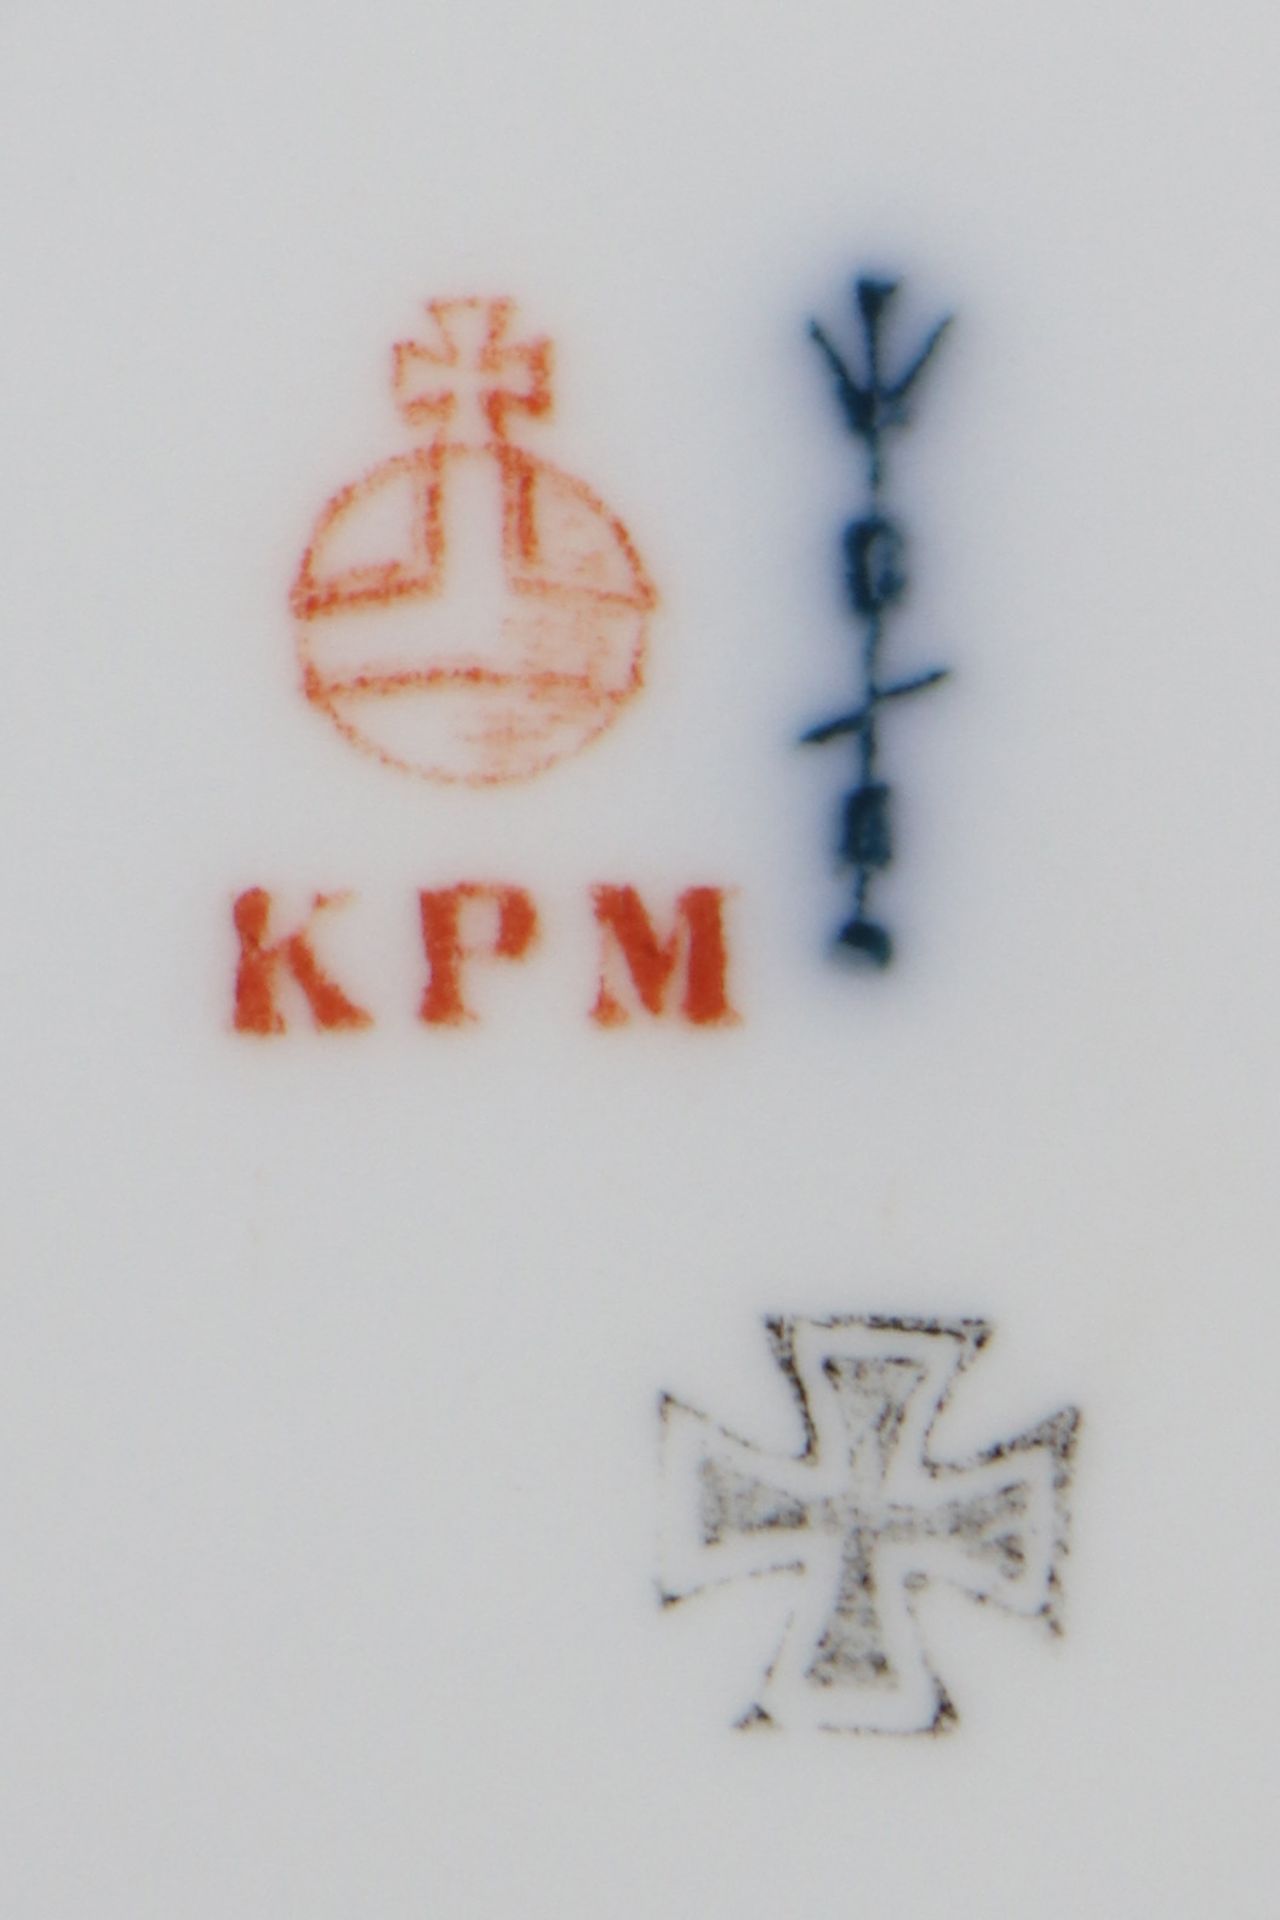 6 KPM BERLIN Porzellanteller mit Obstdekor - Image 4 of 5